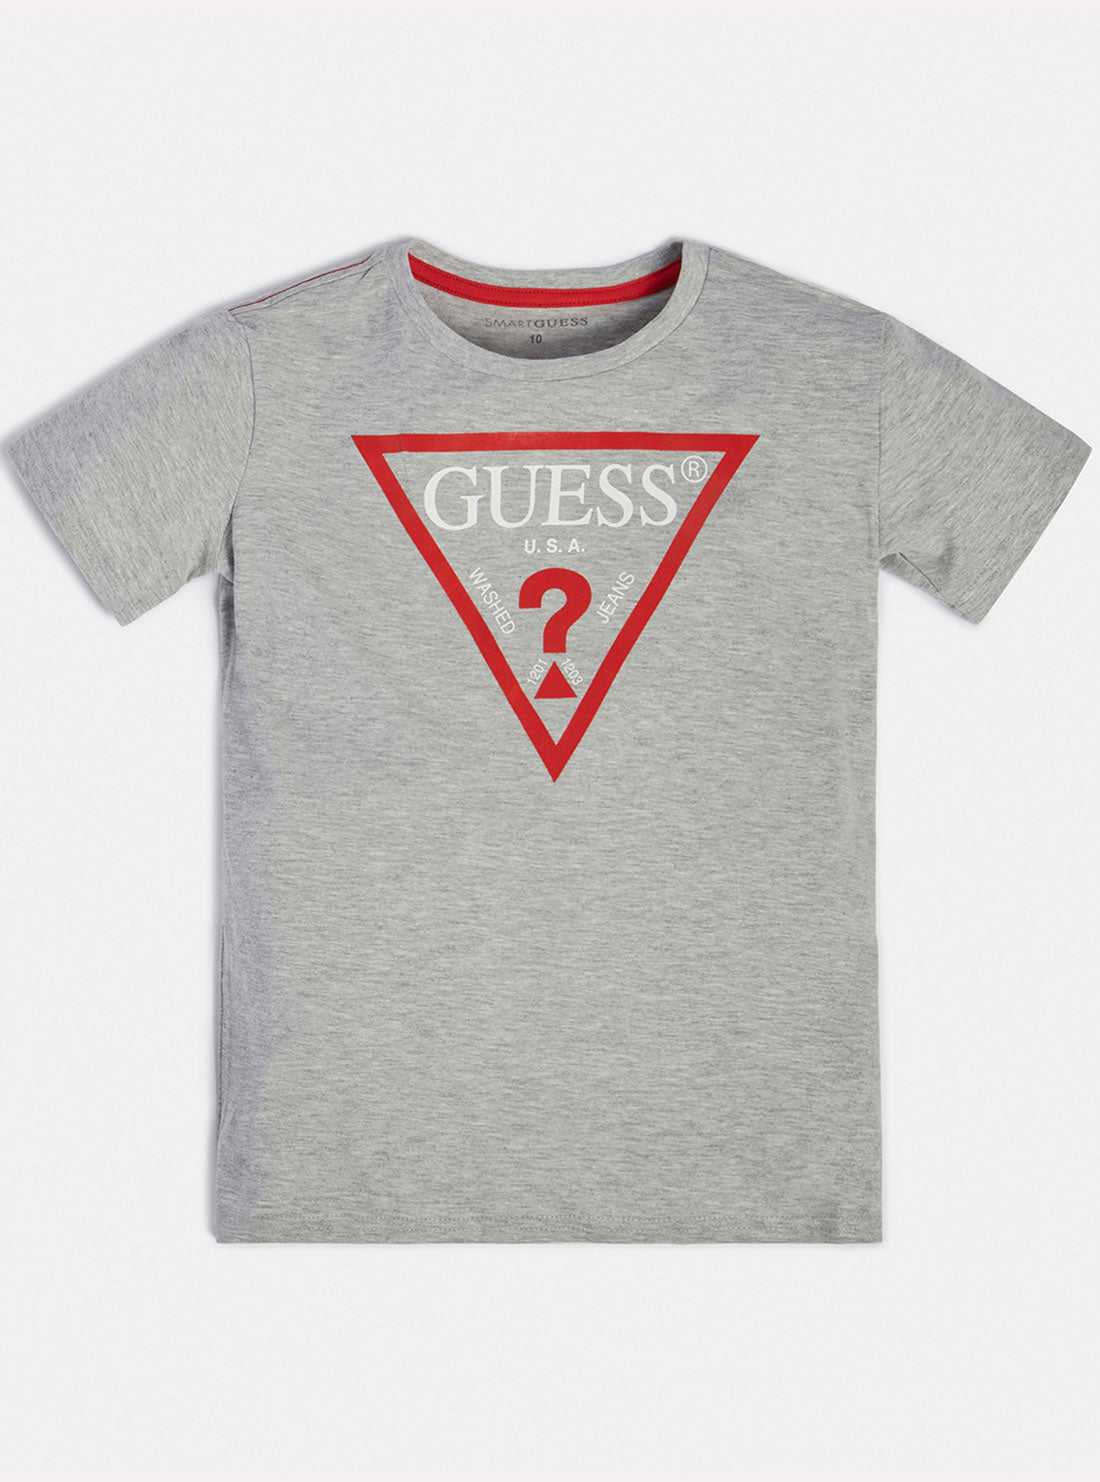 GUESS Big Boys Grey Logo T-Shirt (7-16) L73I55K8HM0 Front View